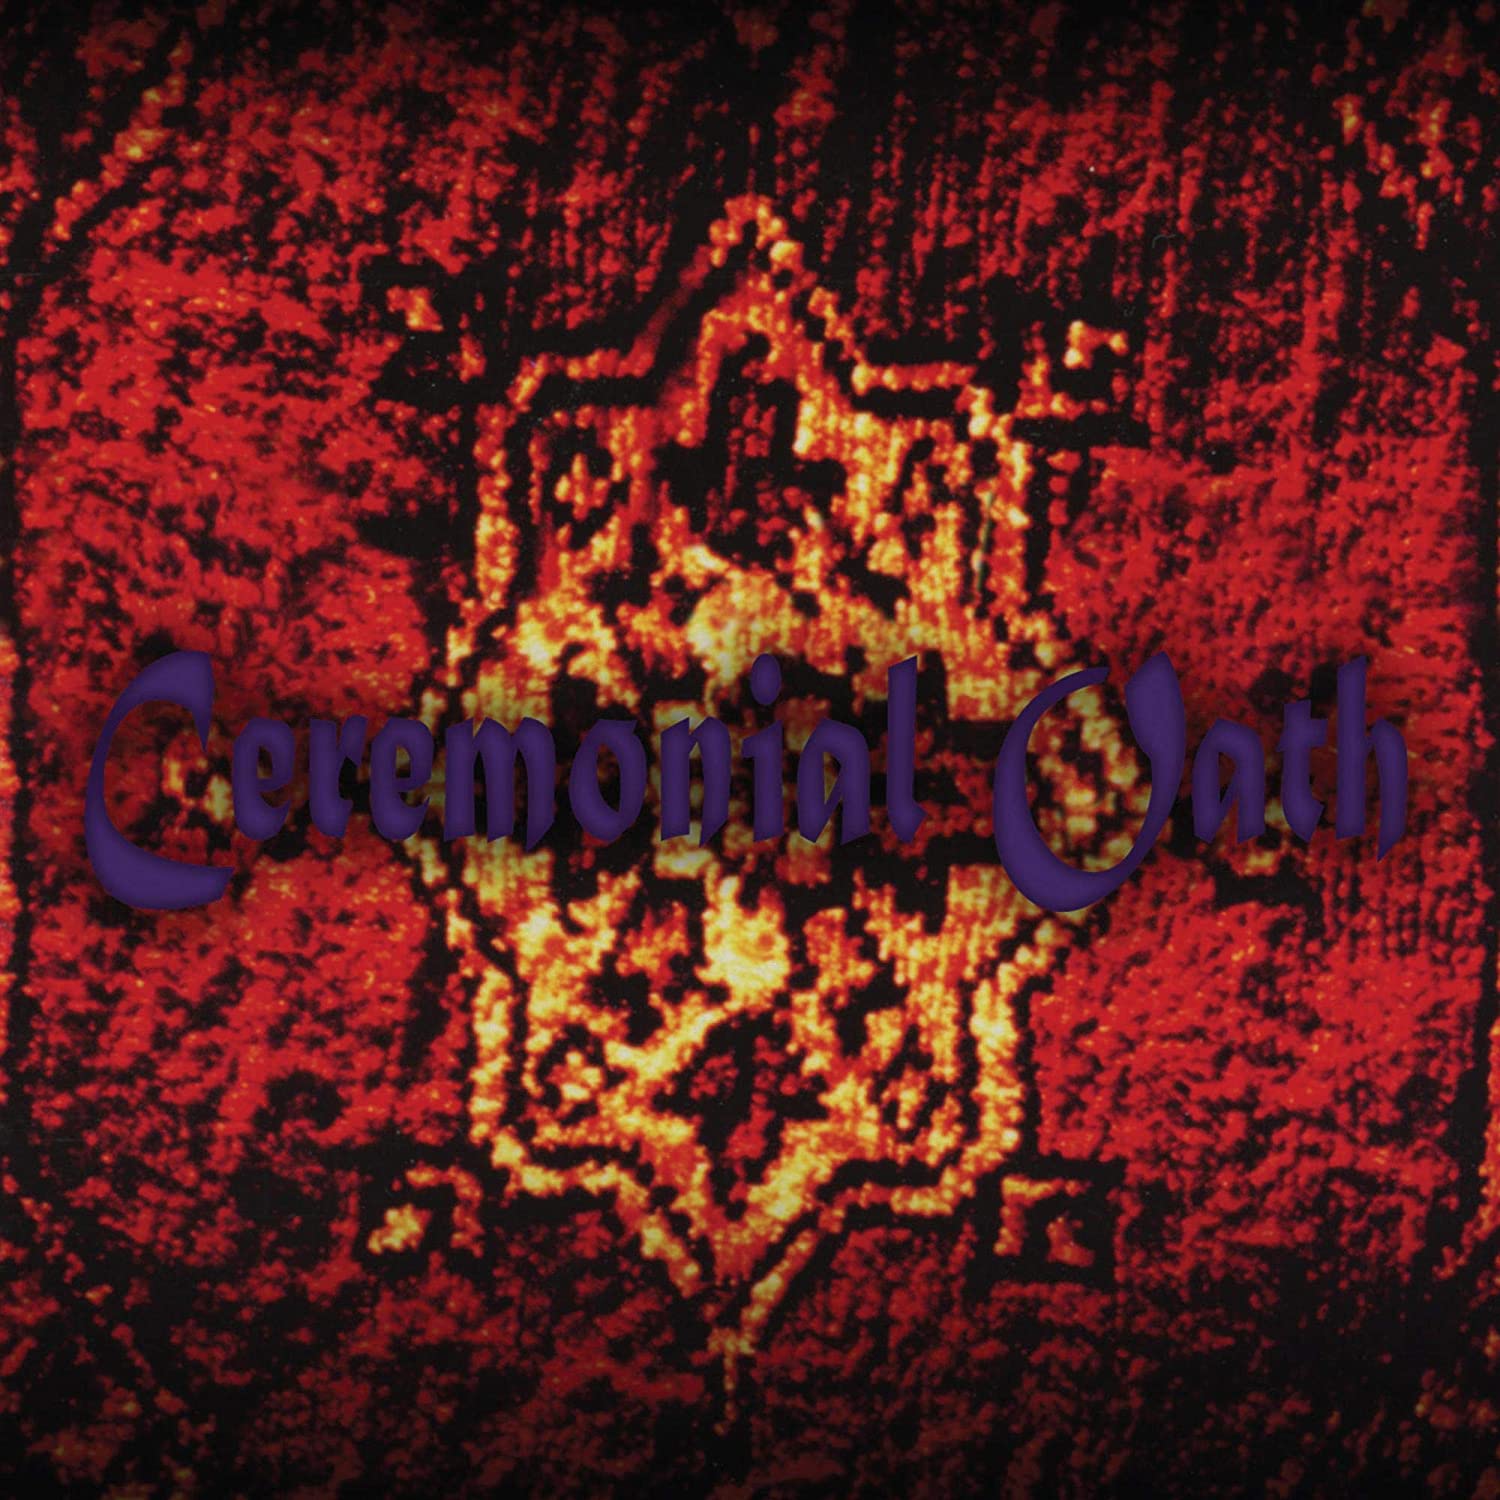 ceremonial oath – carpet [re-release]